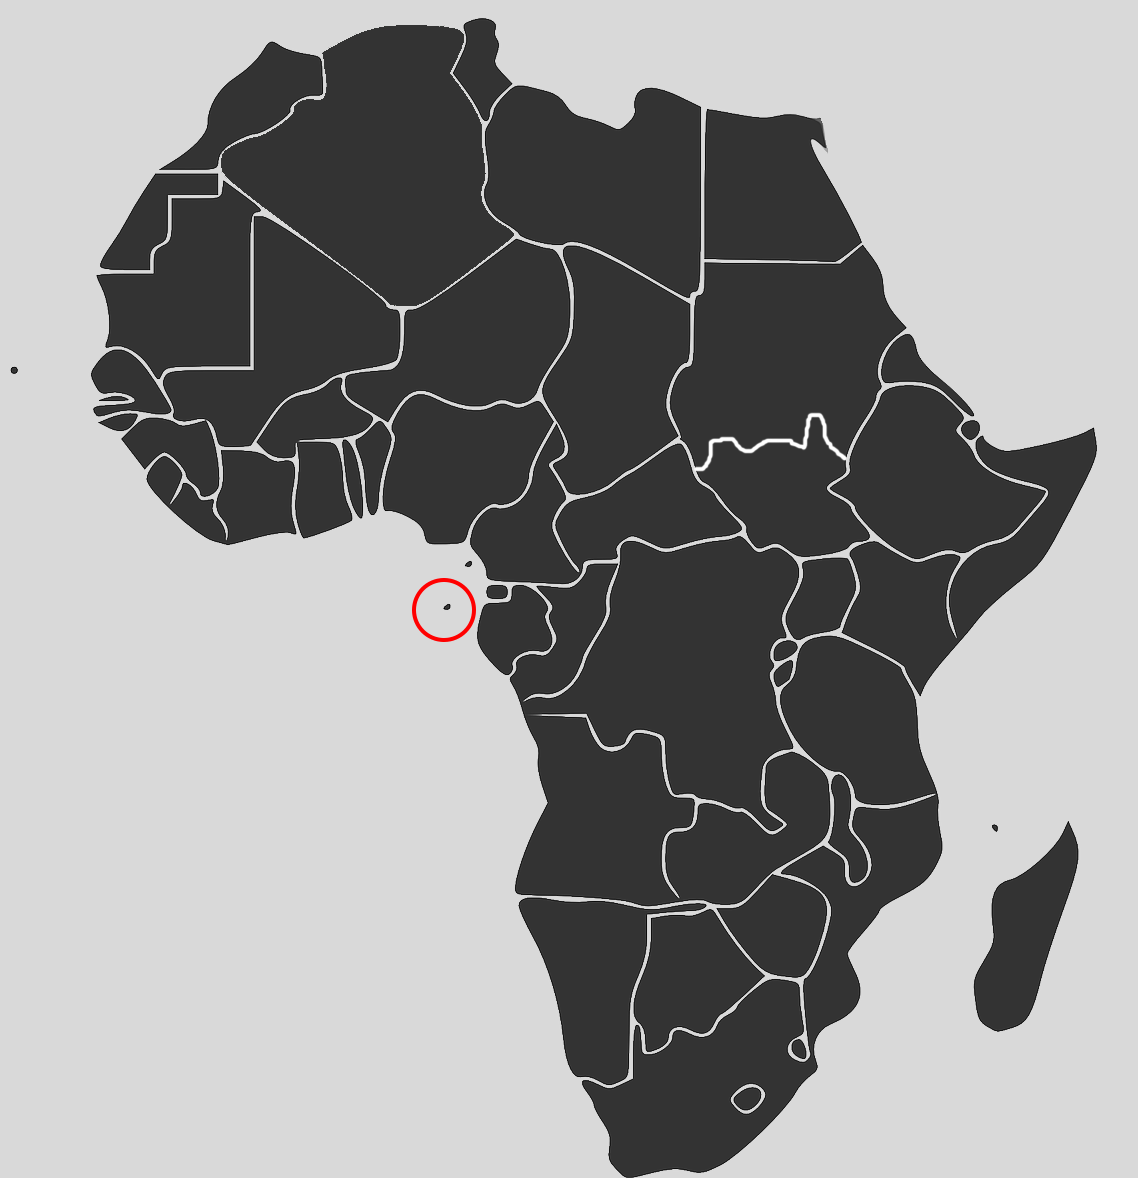 Africa Map - São Tomé and Príncipe